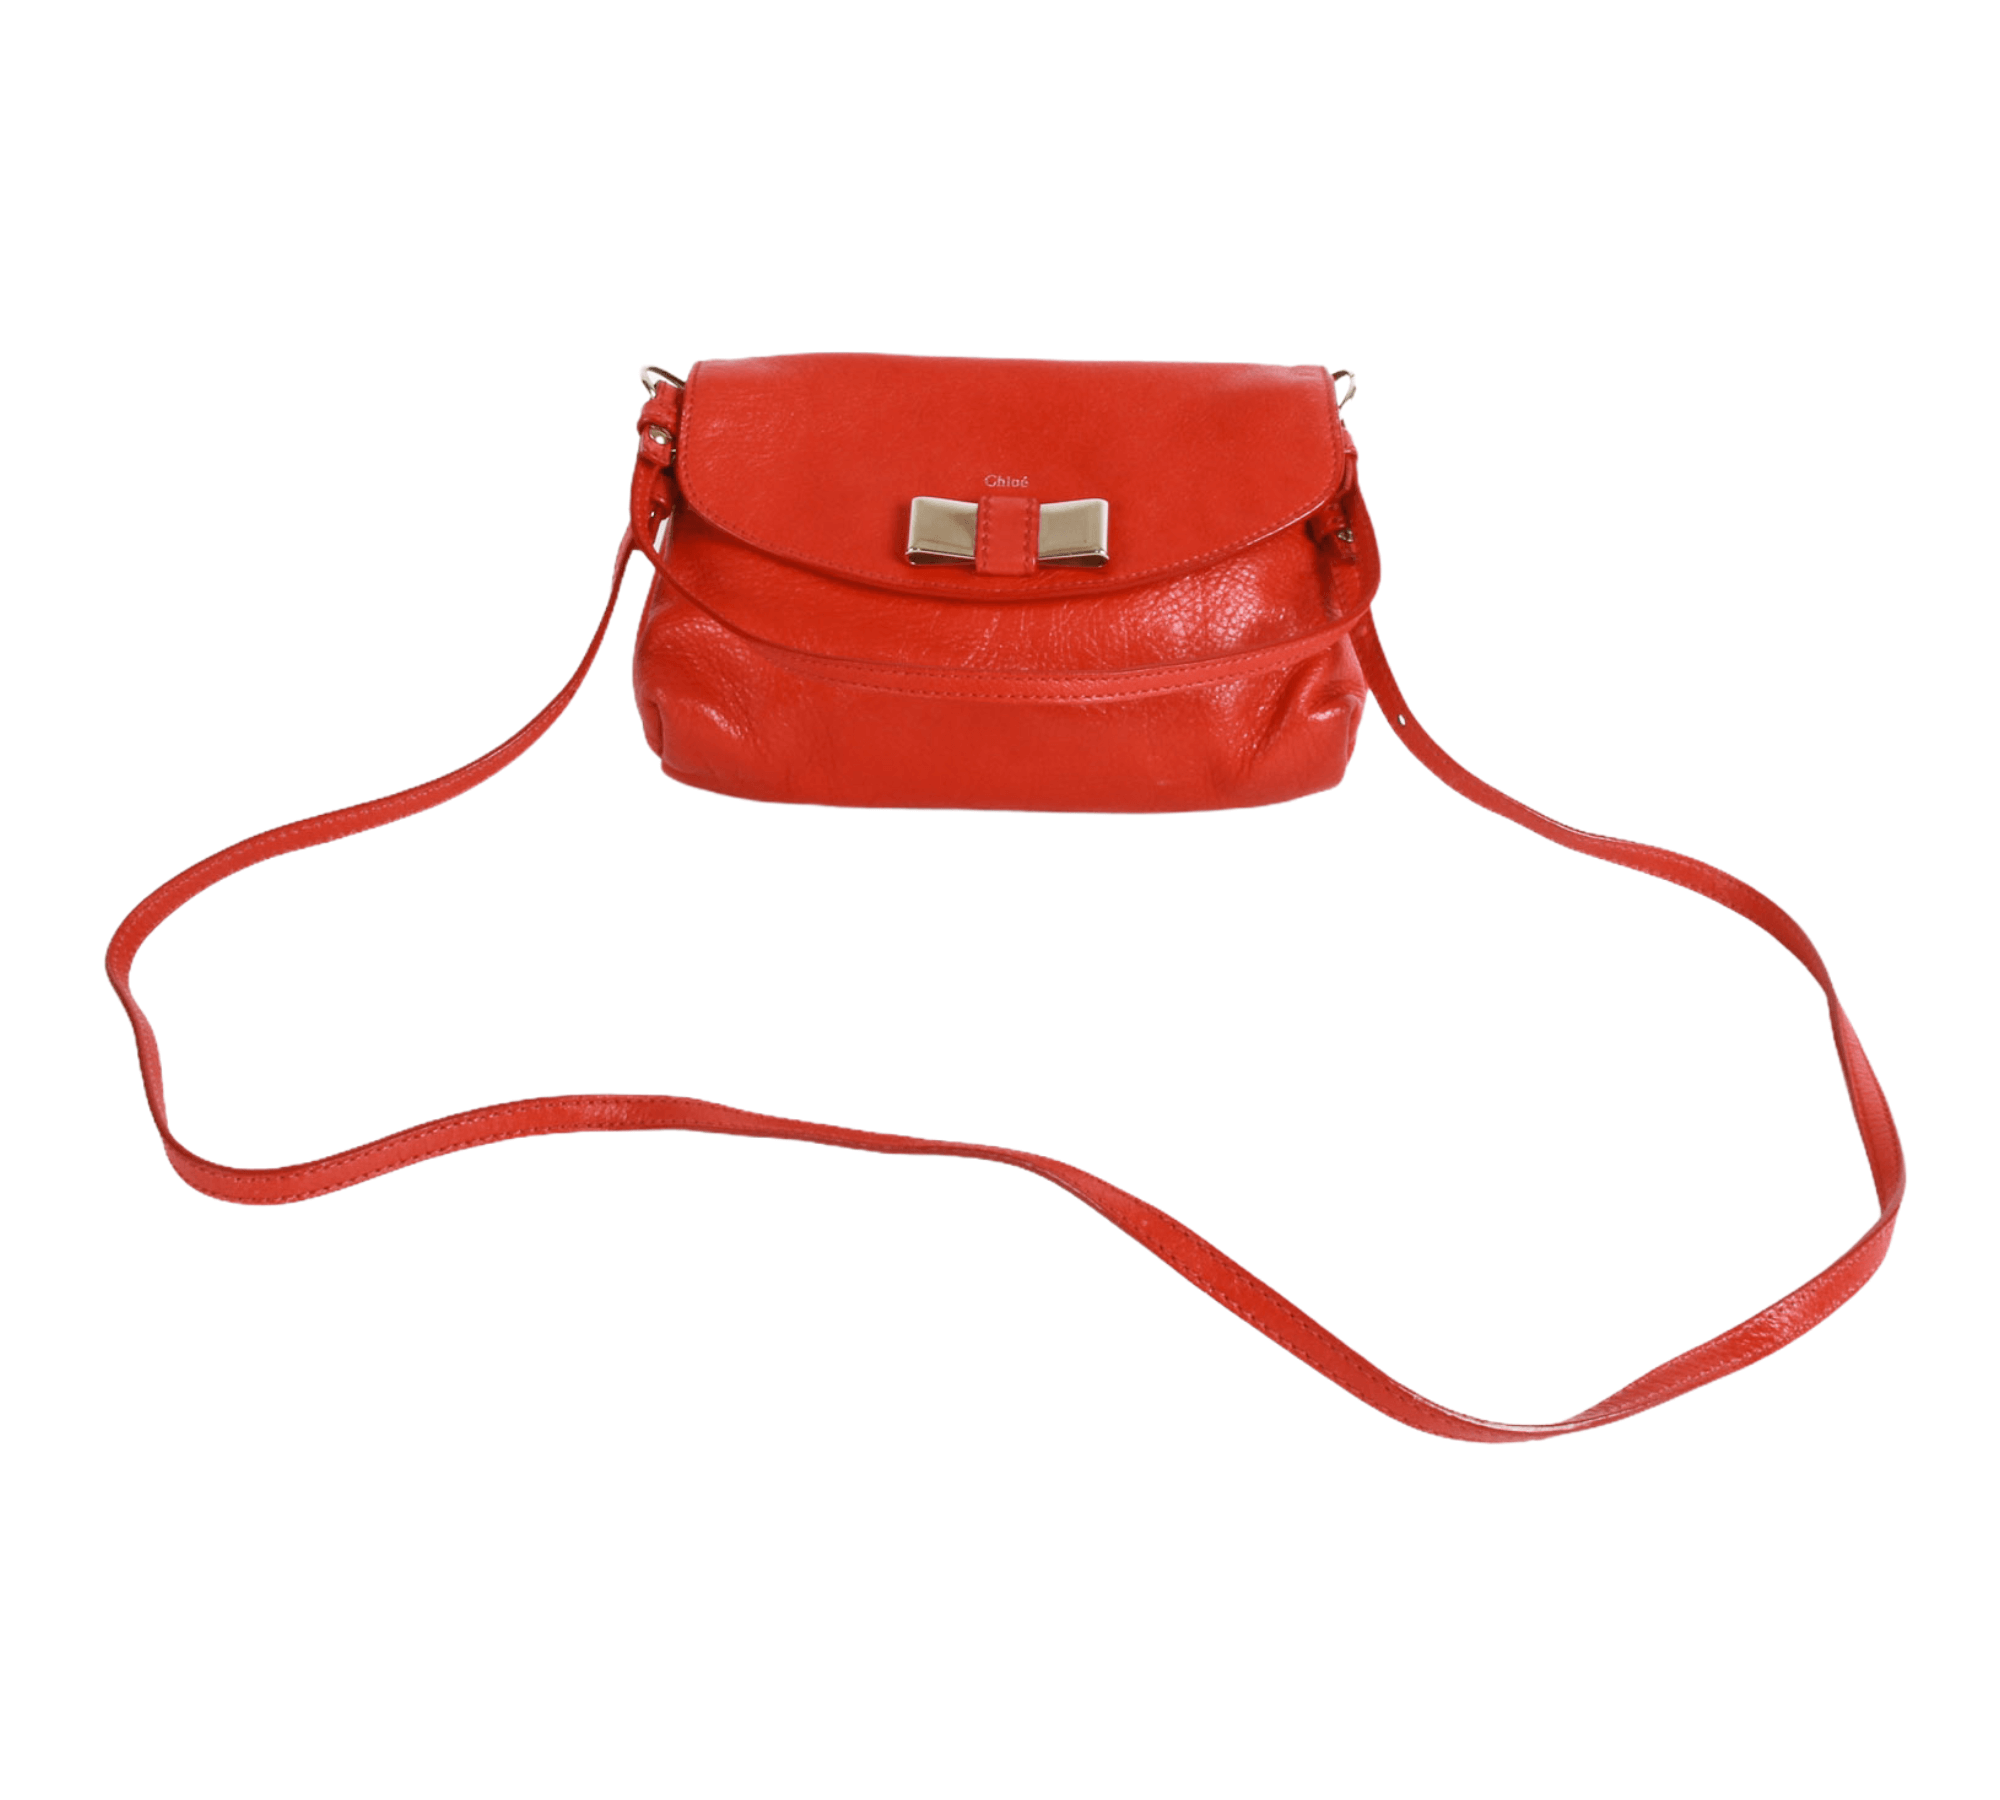 Authentic Chloe red Pochette Lily mini Shoulderbag